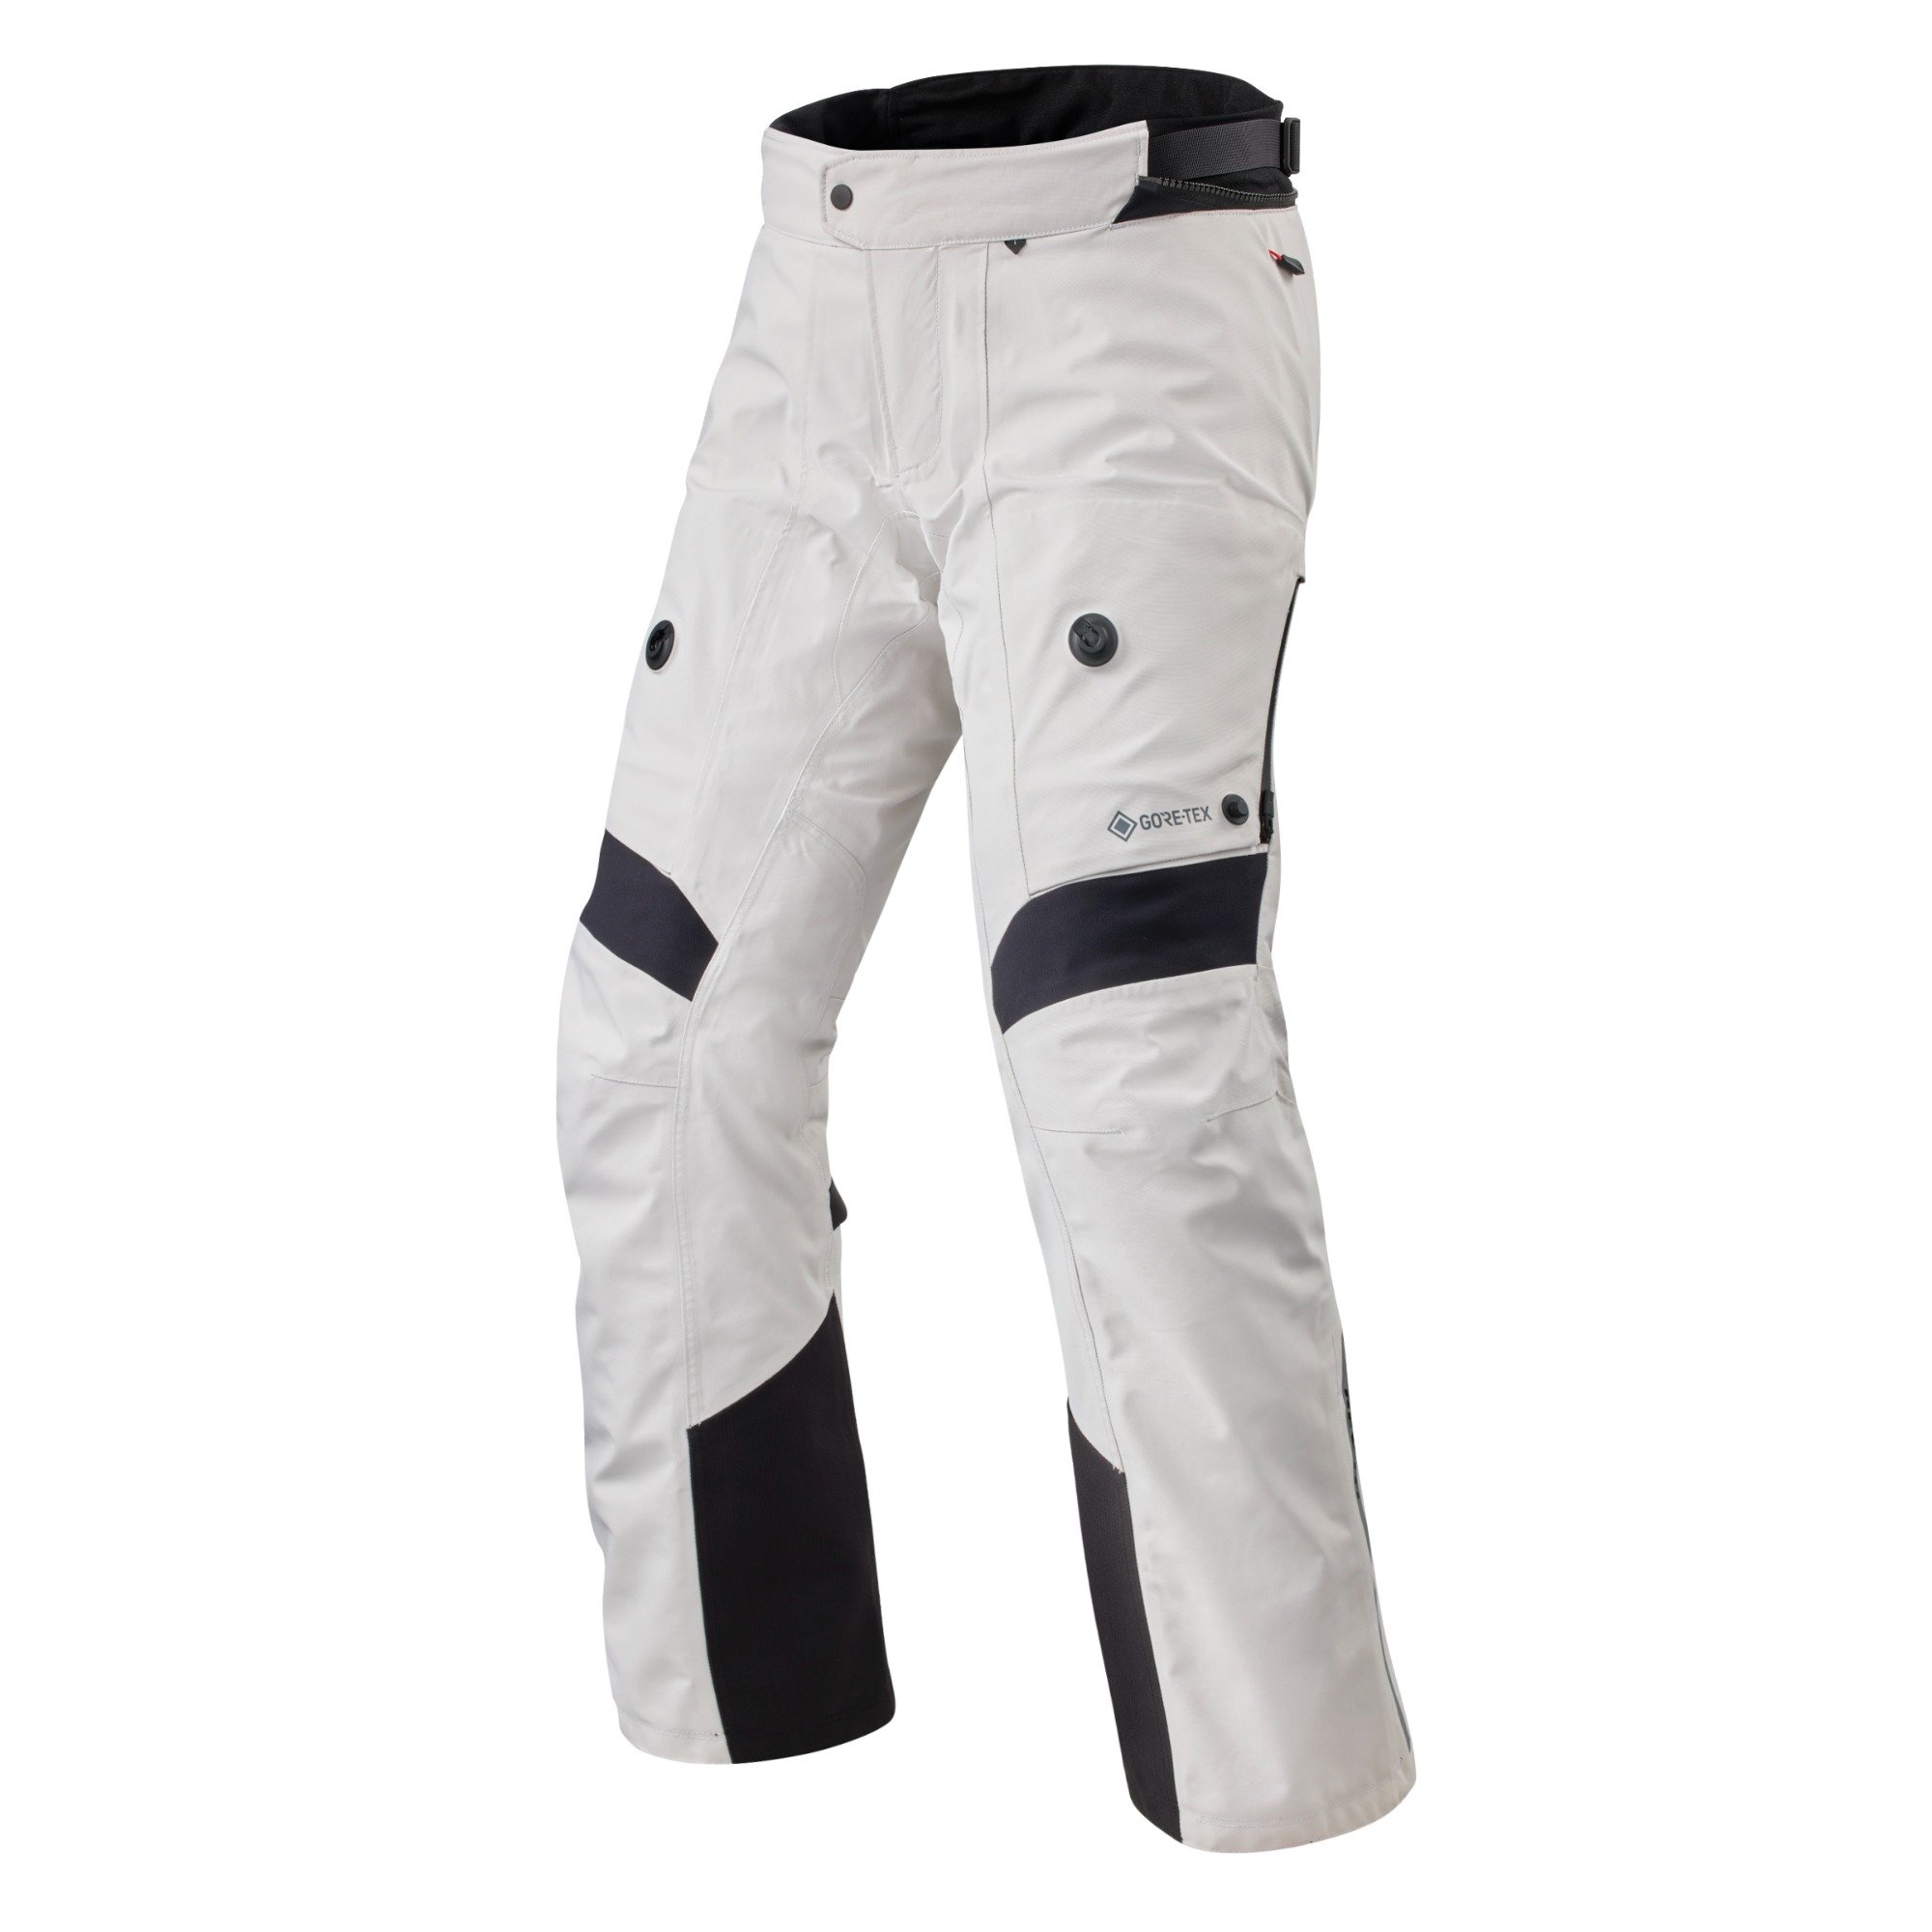 Image of REV'IT! Pants Poseidon 3 GTX Silver Black Standard Motorcycle Pants Size L ID 8700001362603